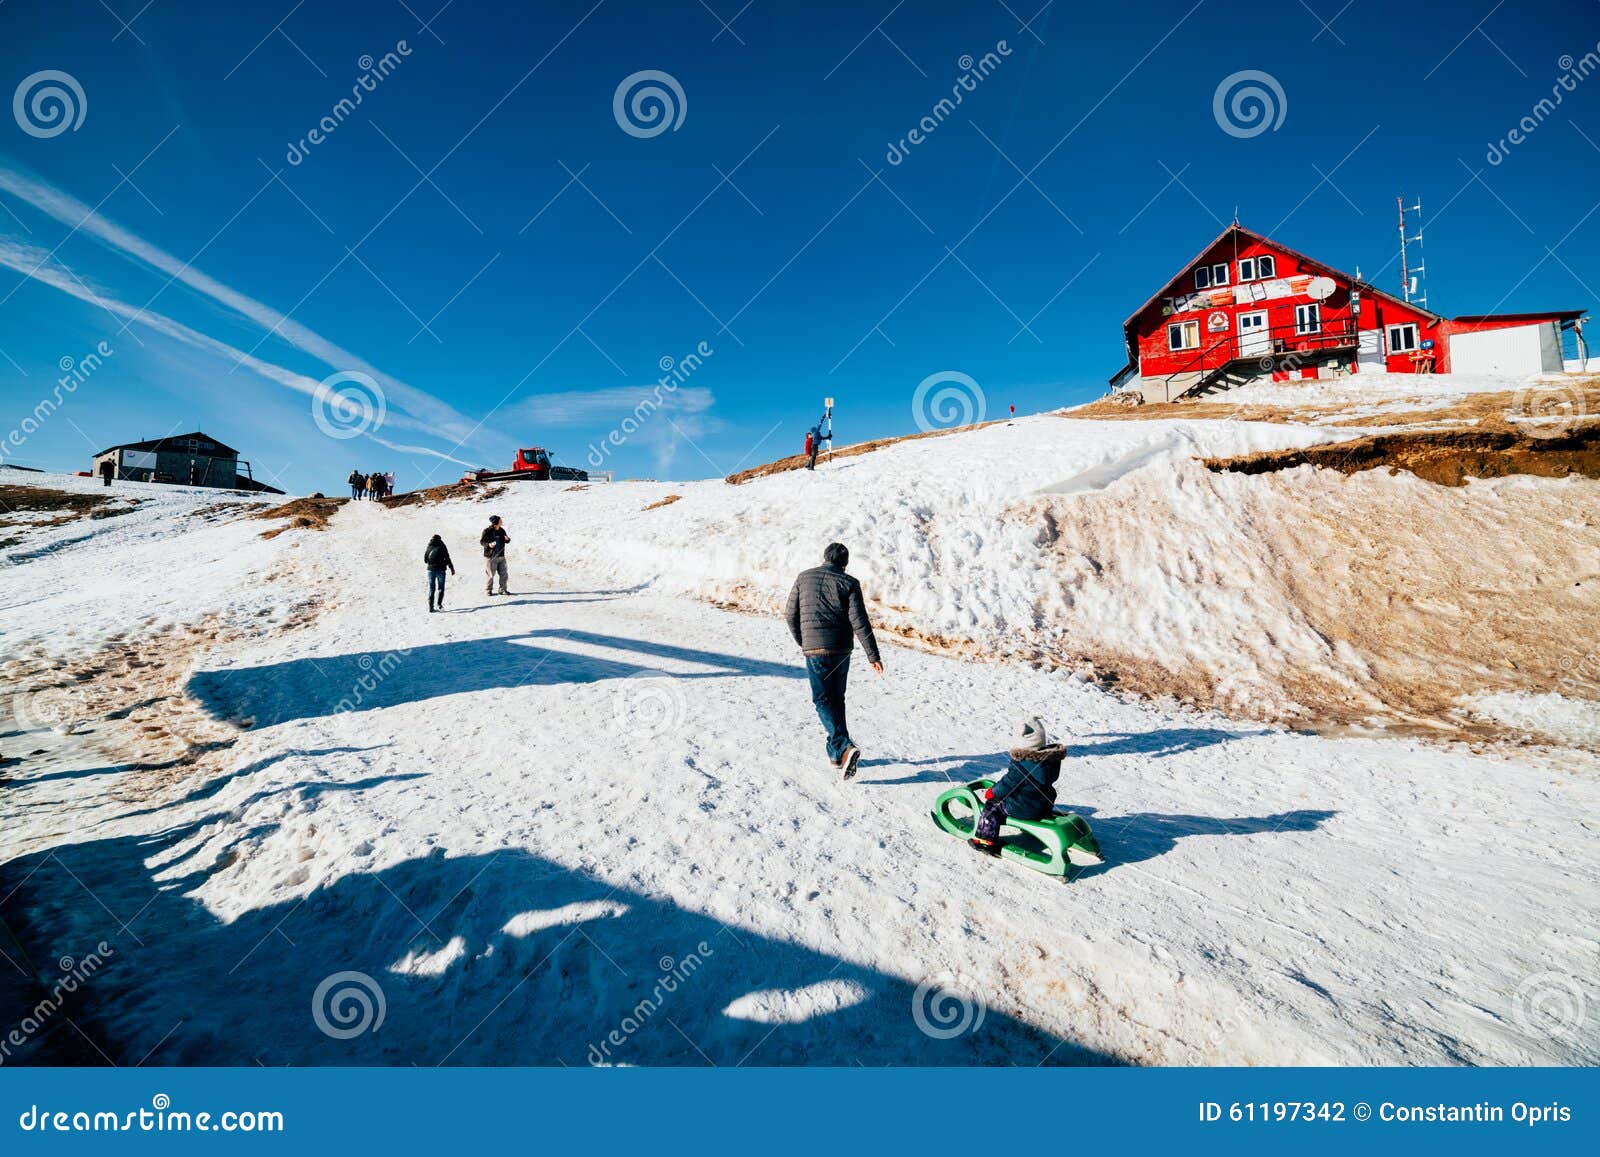 family in snow at cota 2000 sinaia